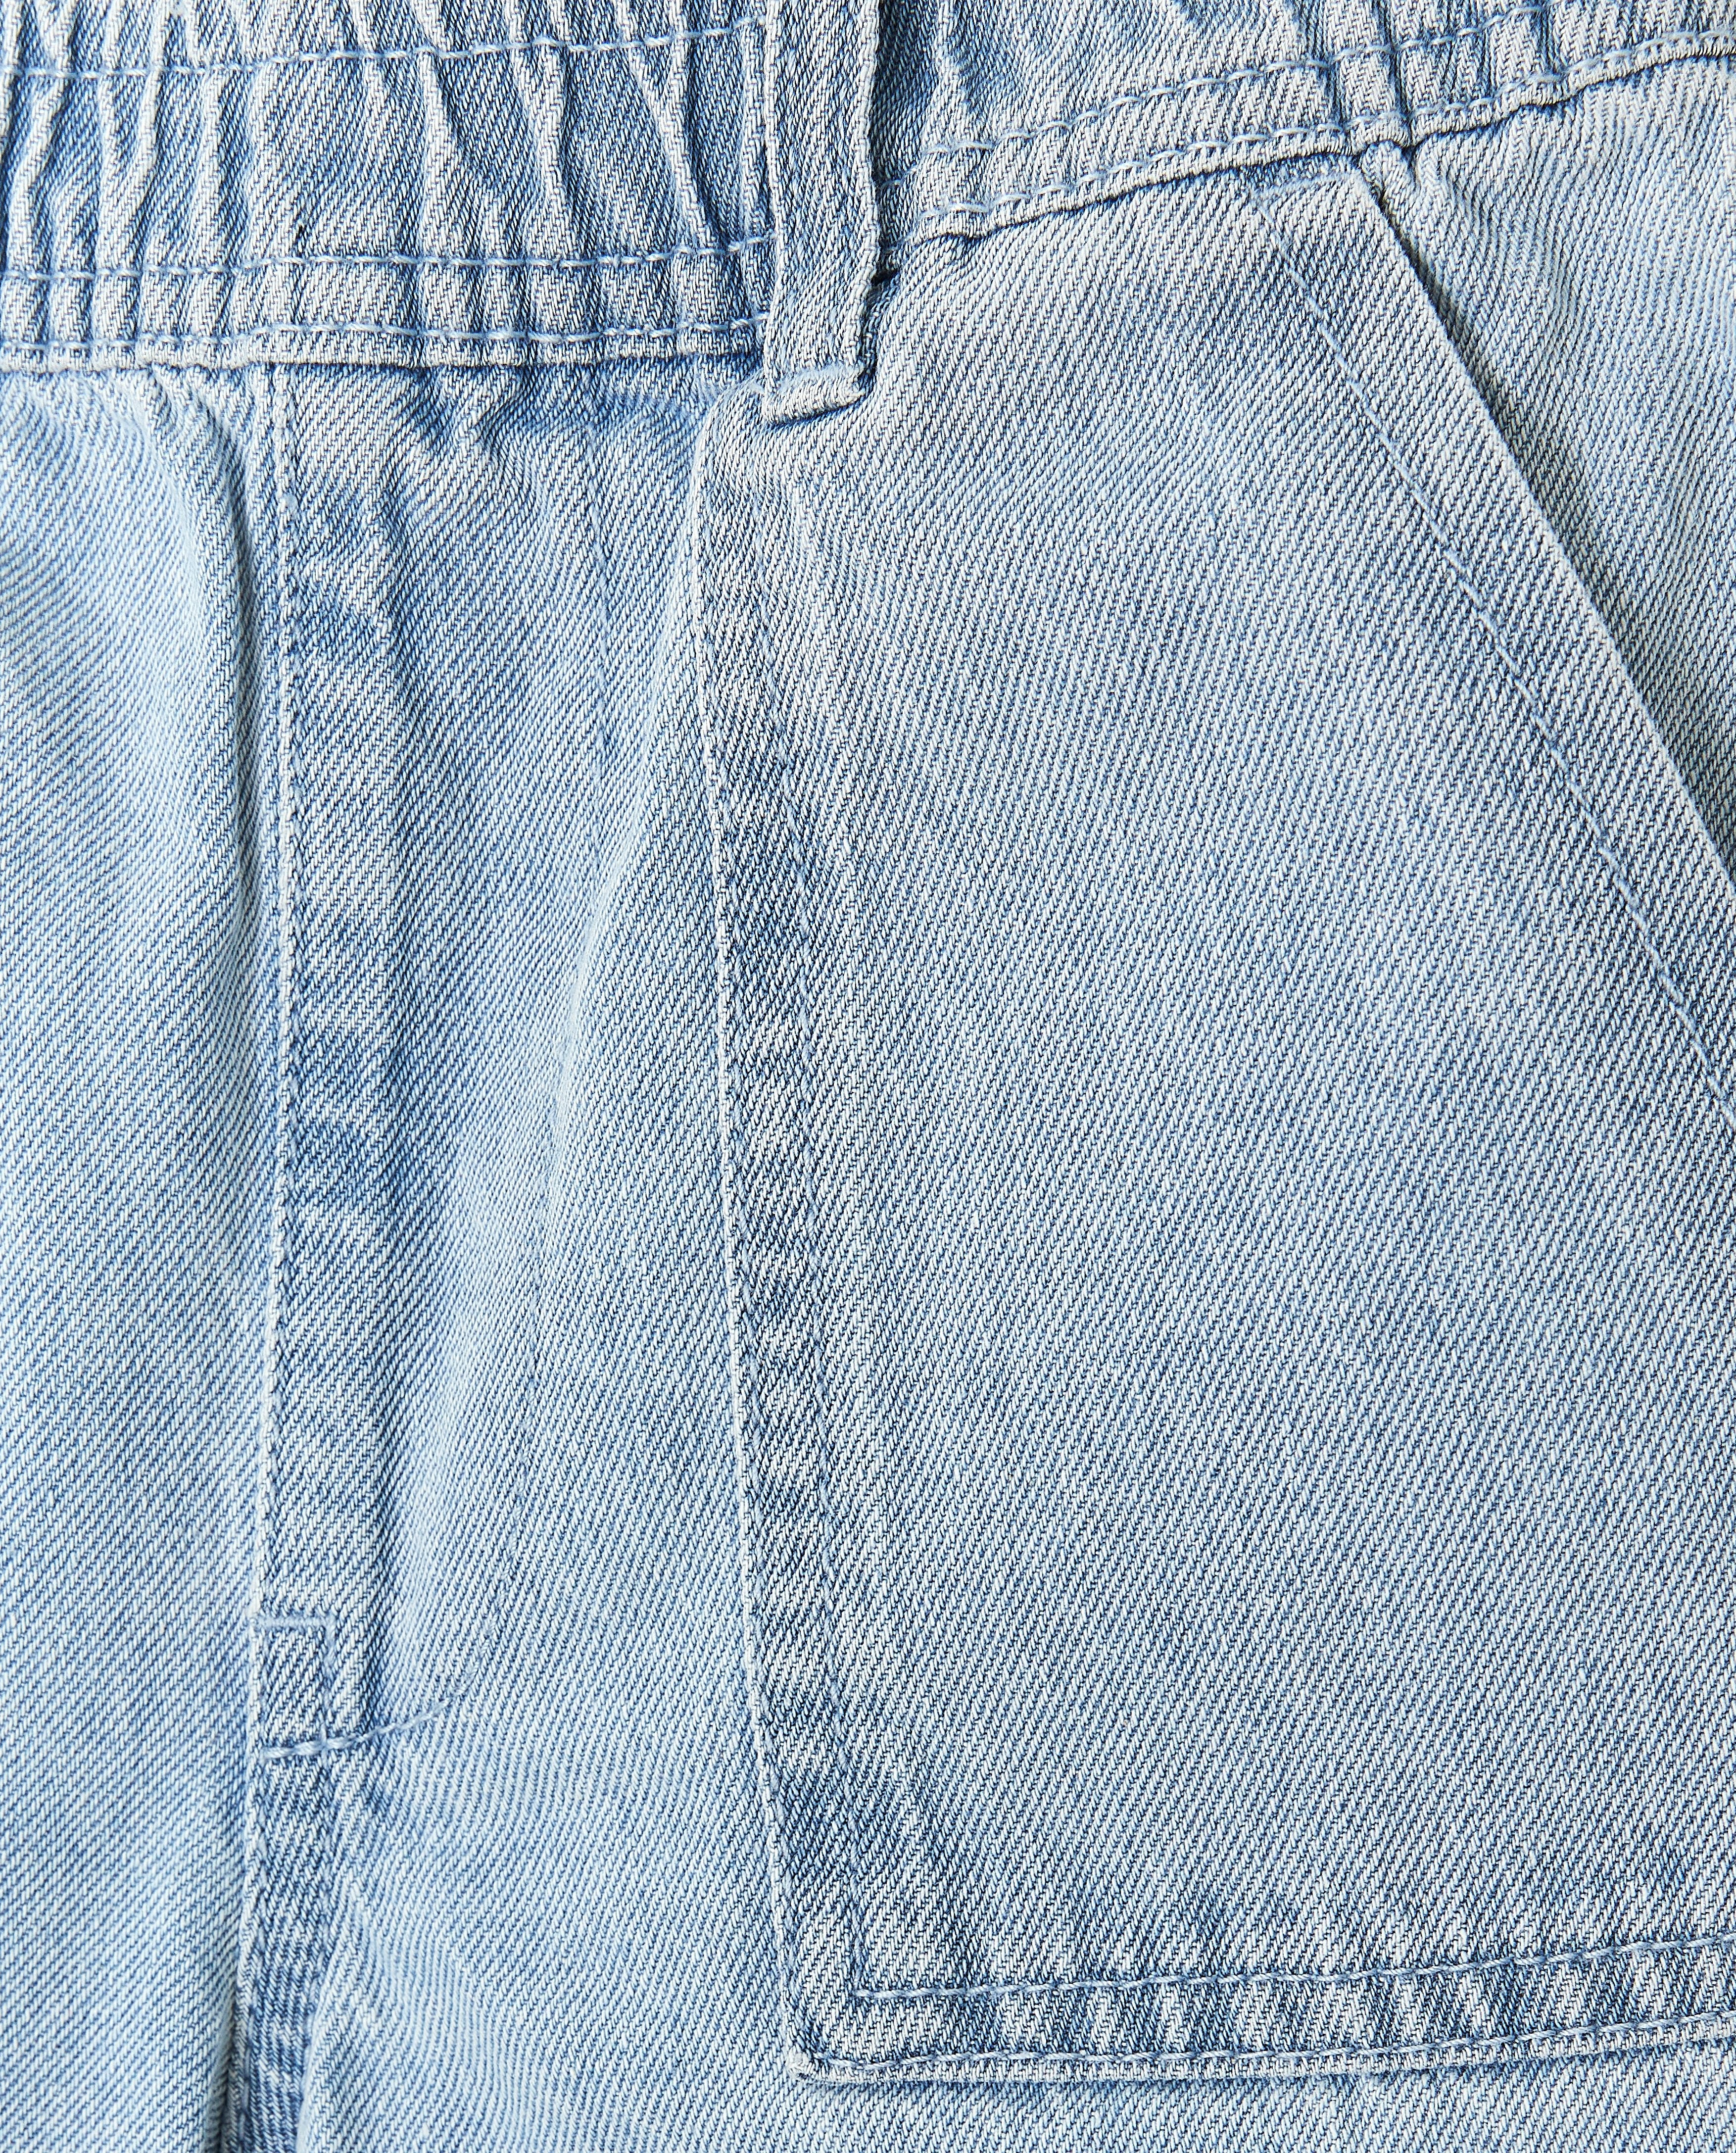 Shorten - Blauwe jeansshort, regular fit